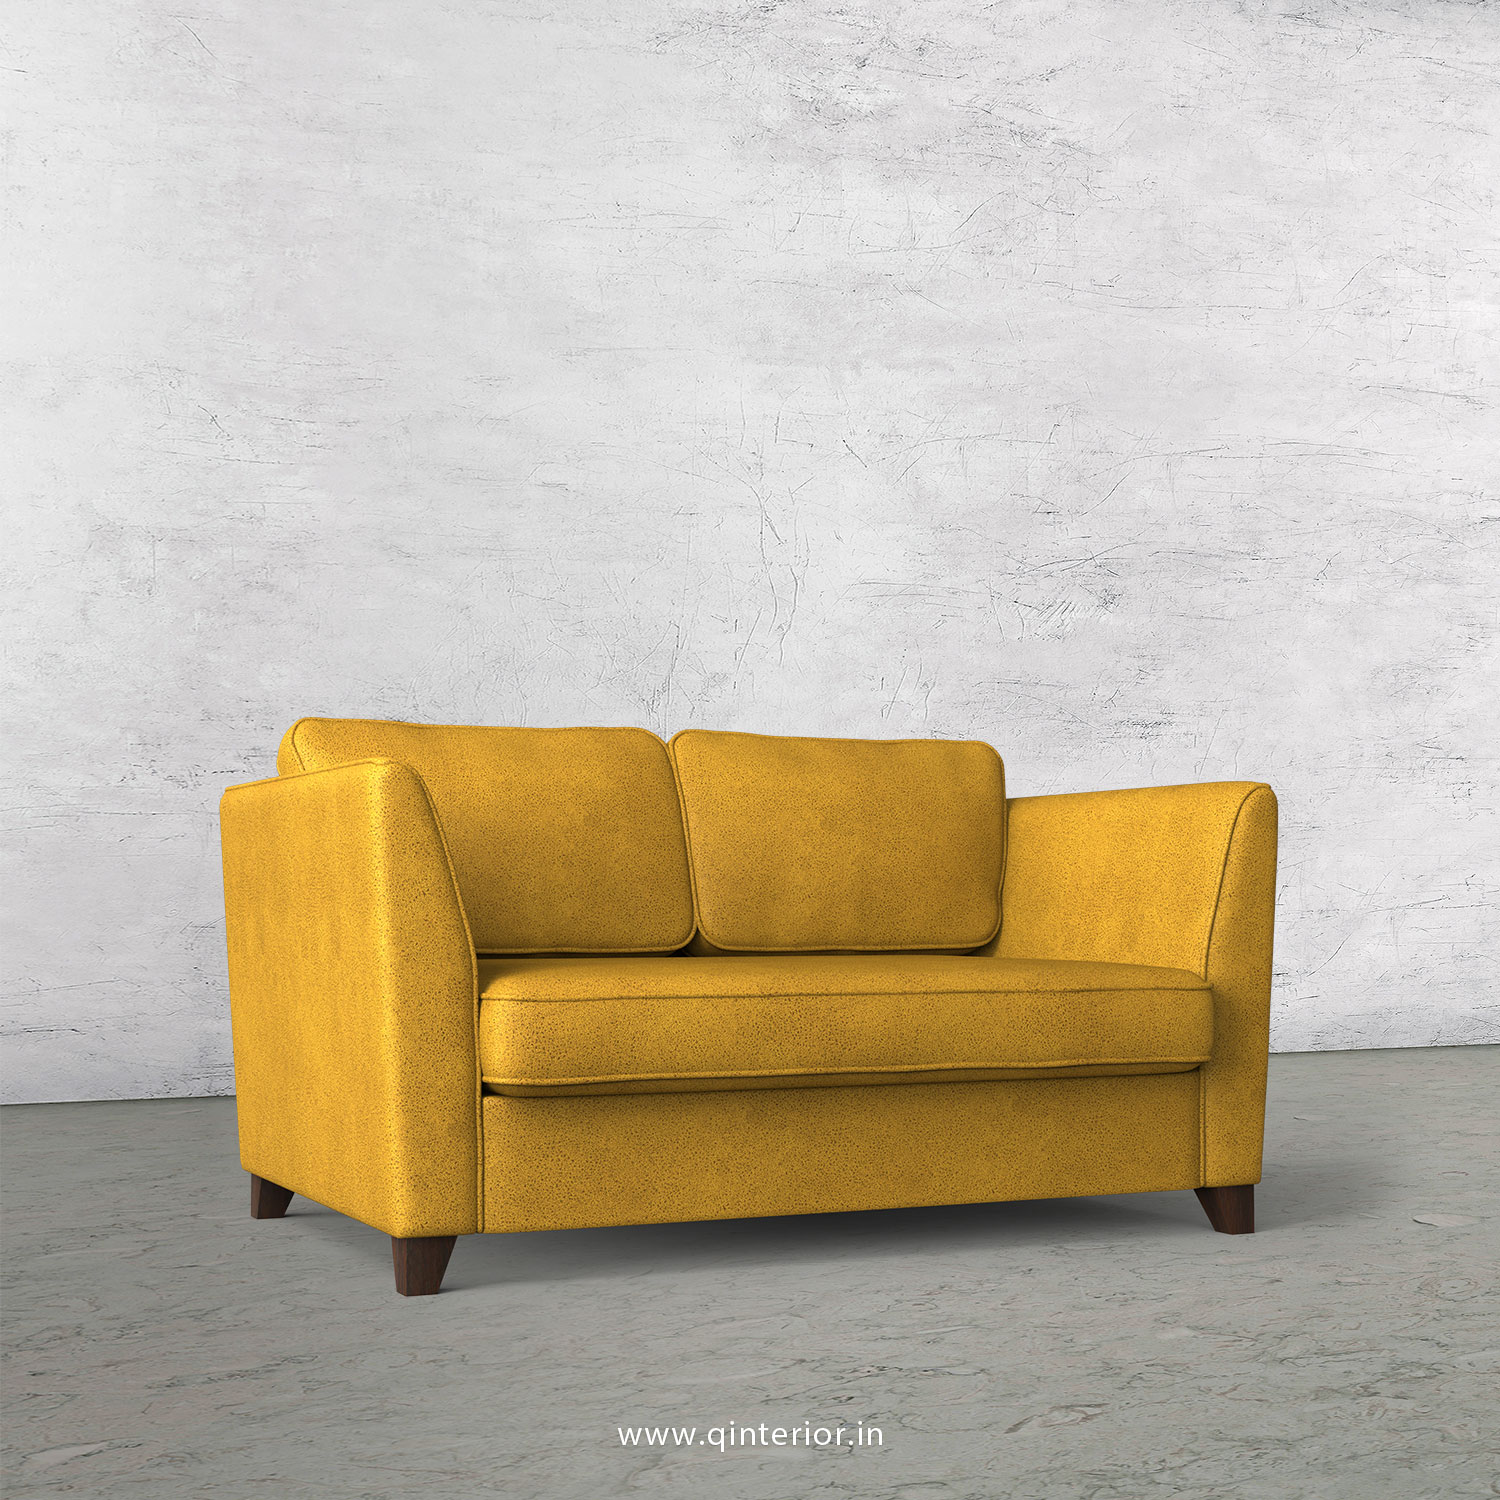 Kingstone 2 Seater Sofa in Fab Leather Fabric - SFA004 FL18